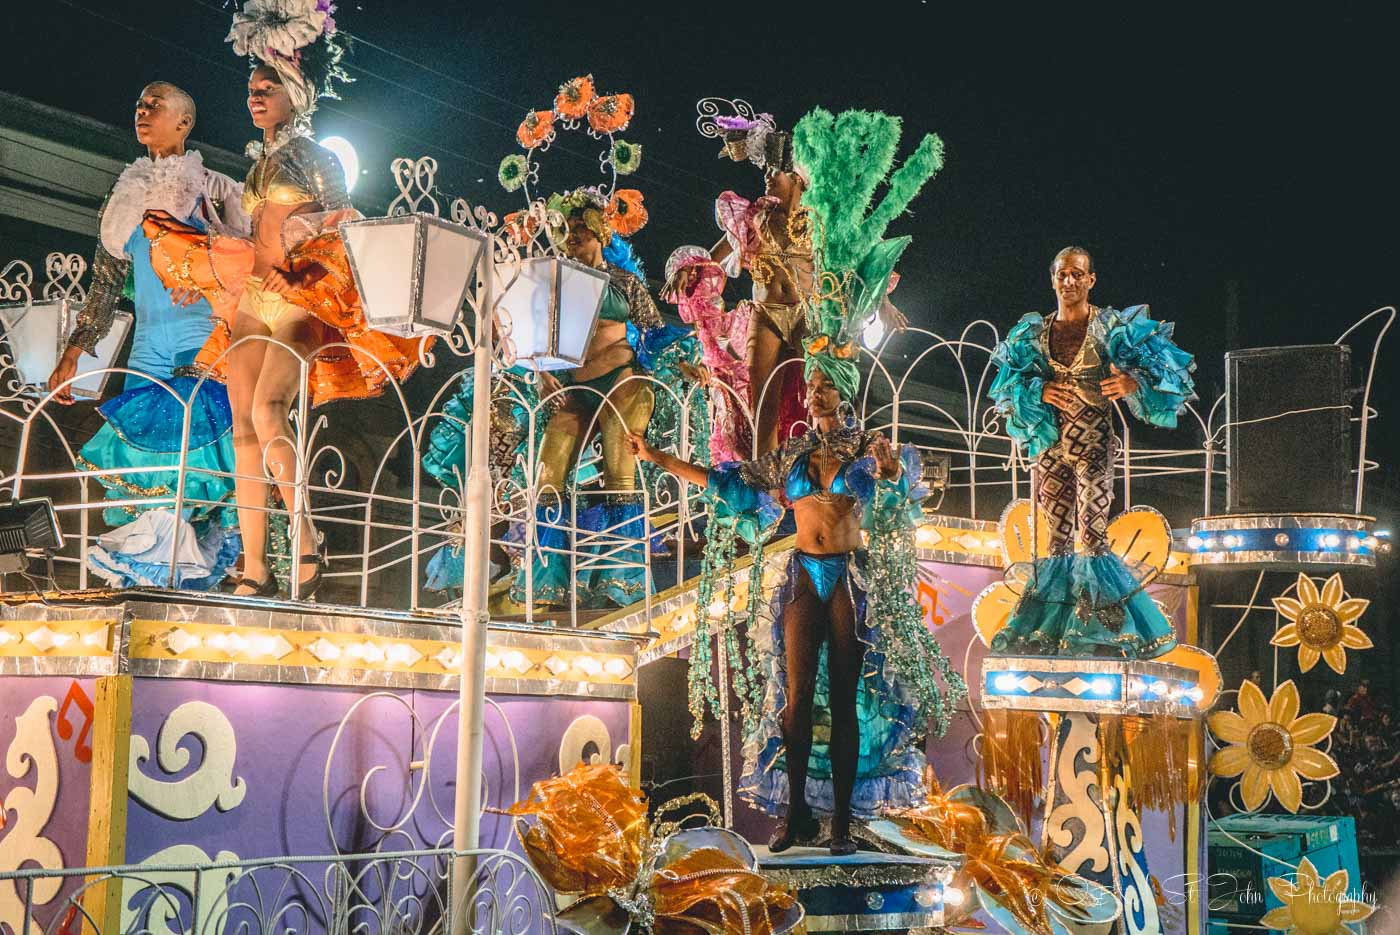 Carnaval de Santiago de Cuba: The Biggest Carnival in the Caribbean